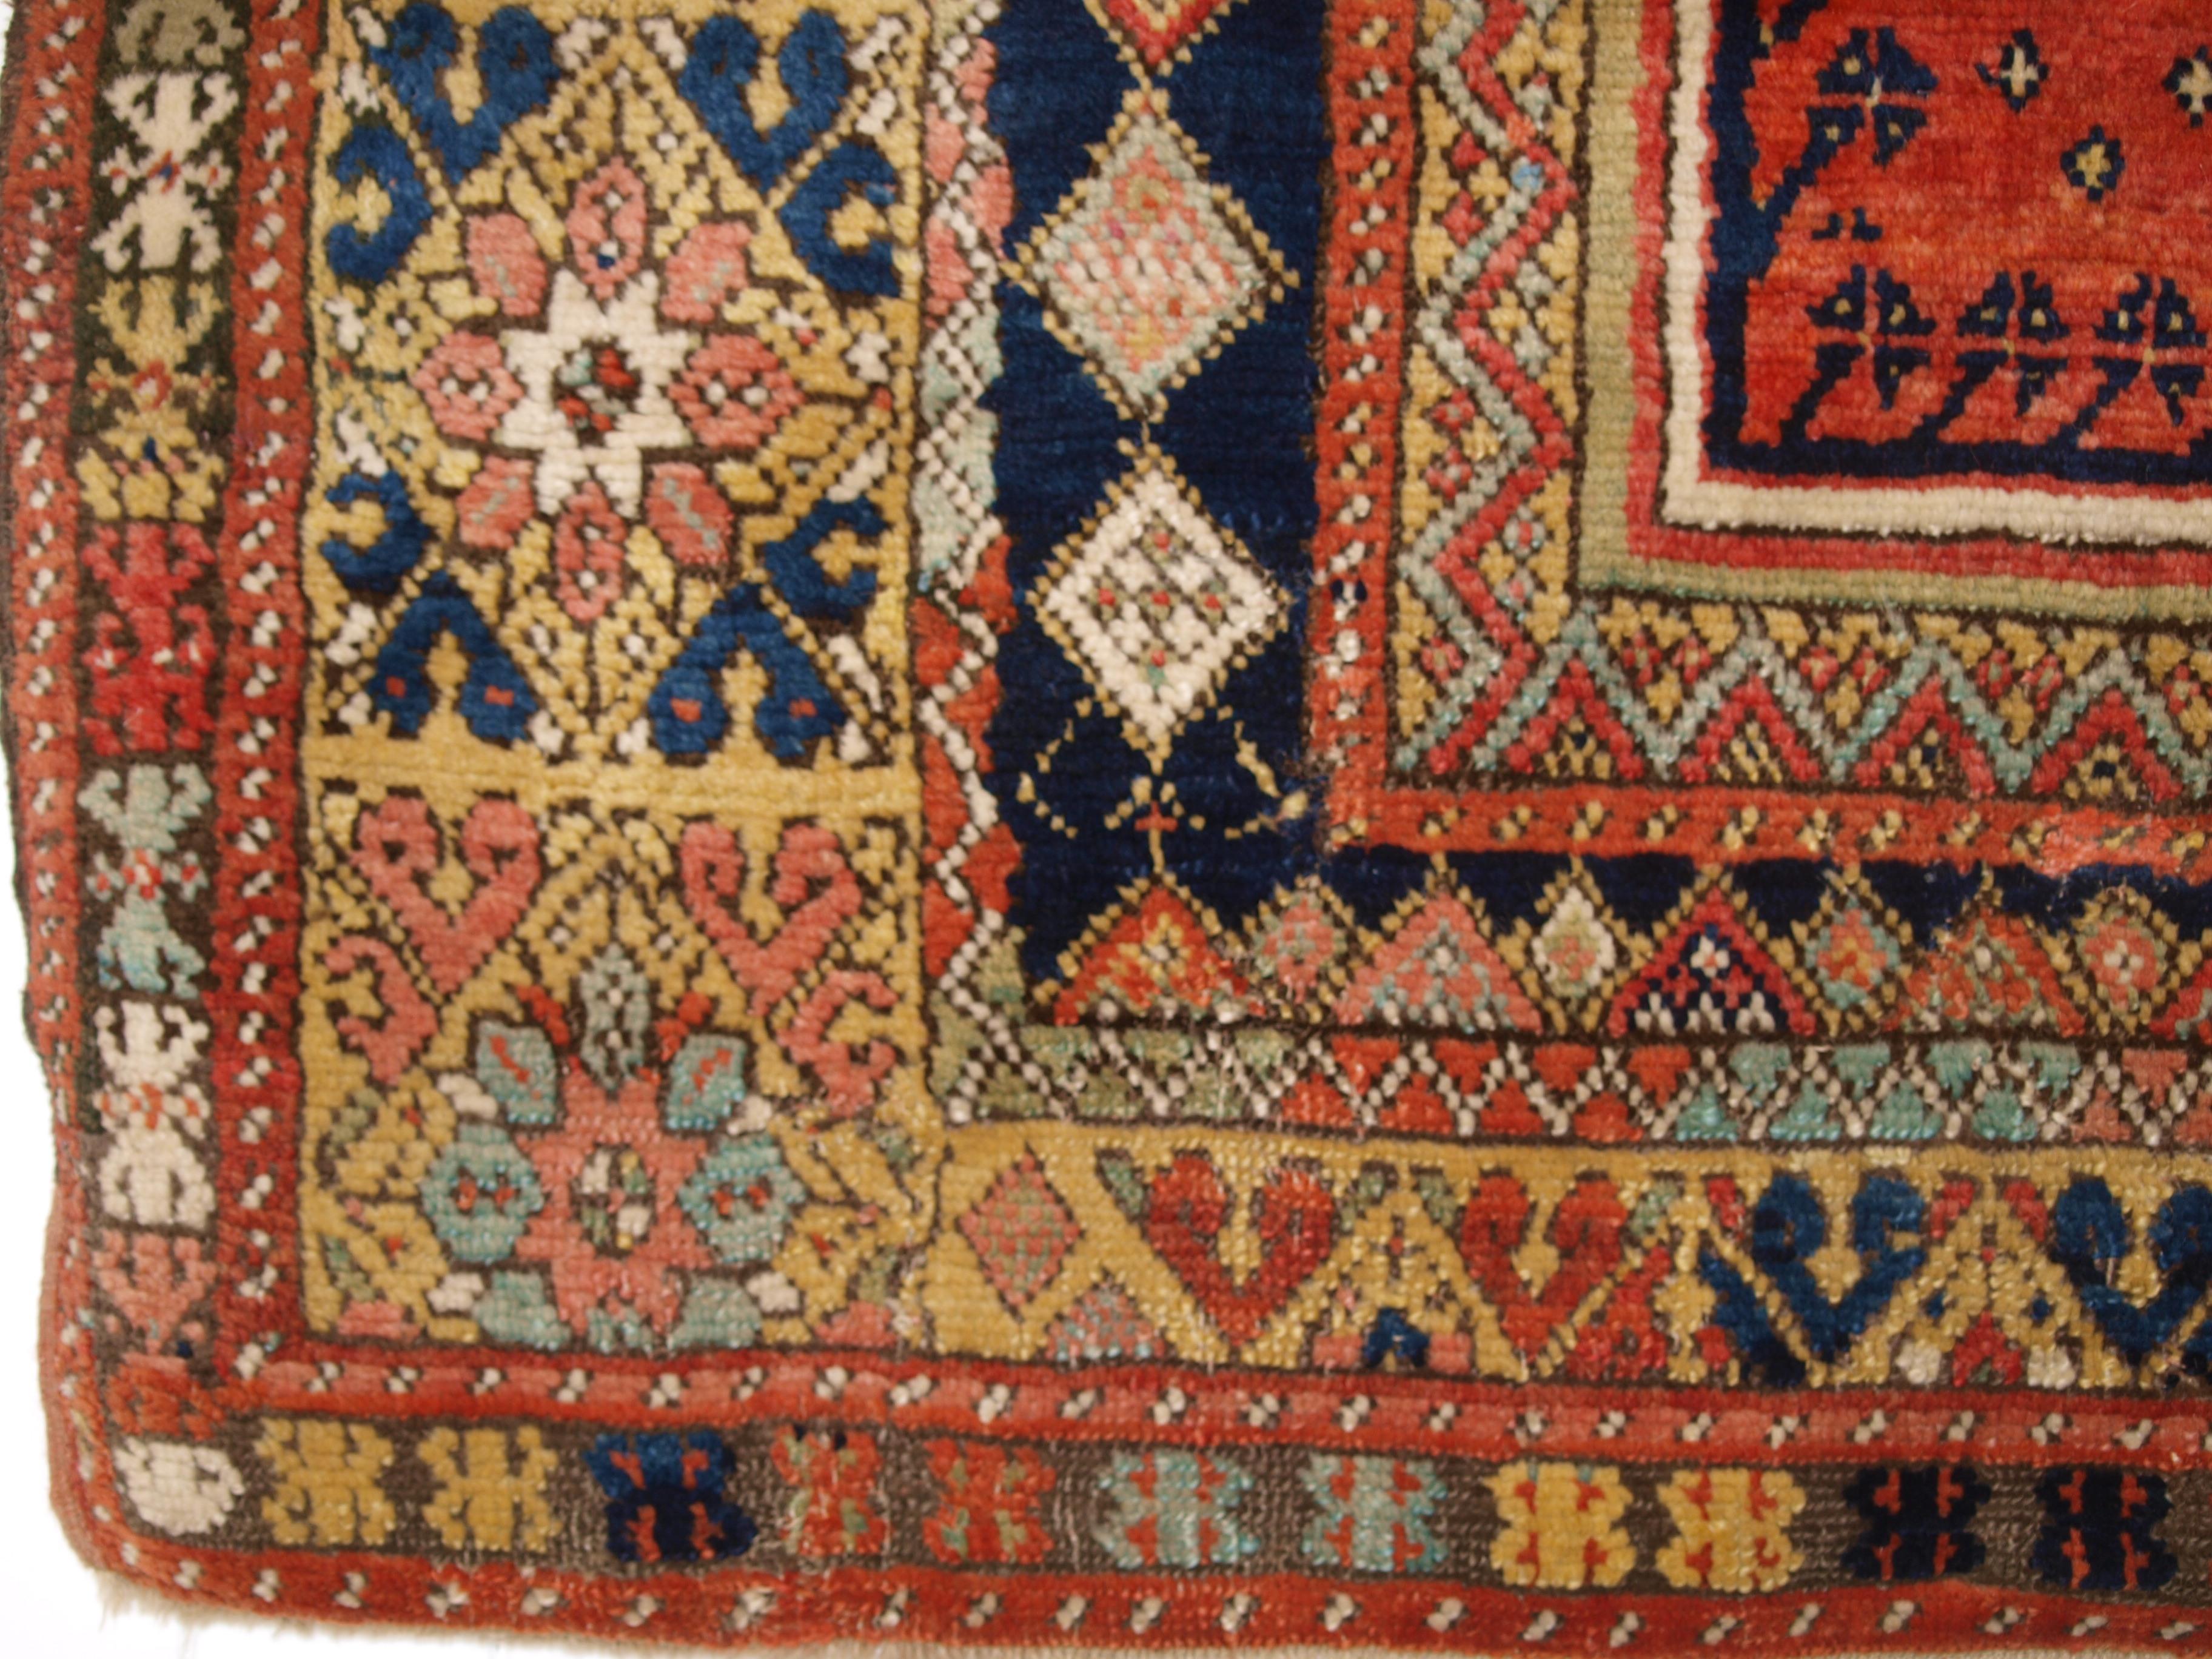 Antique Turkish Mujur Prayer Rug of Classic Design, Mid 19th Century For Sale 8